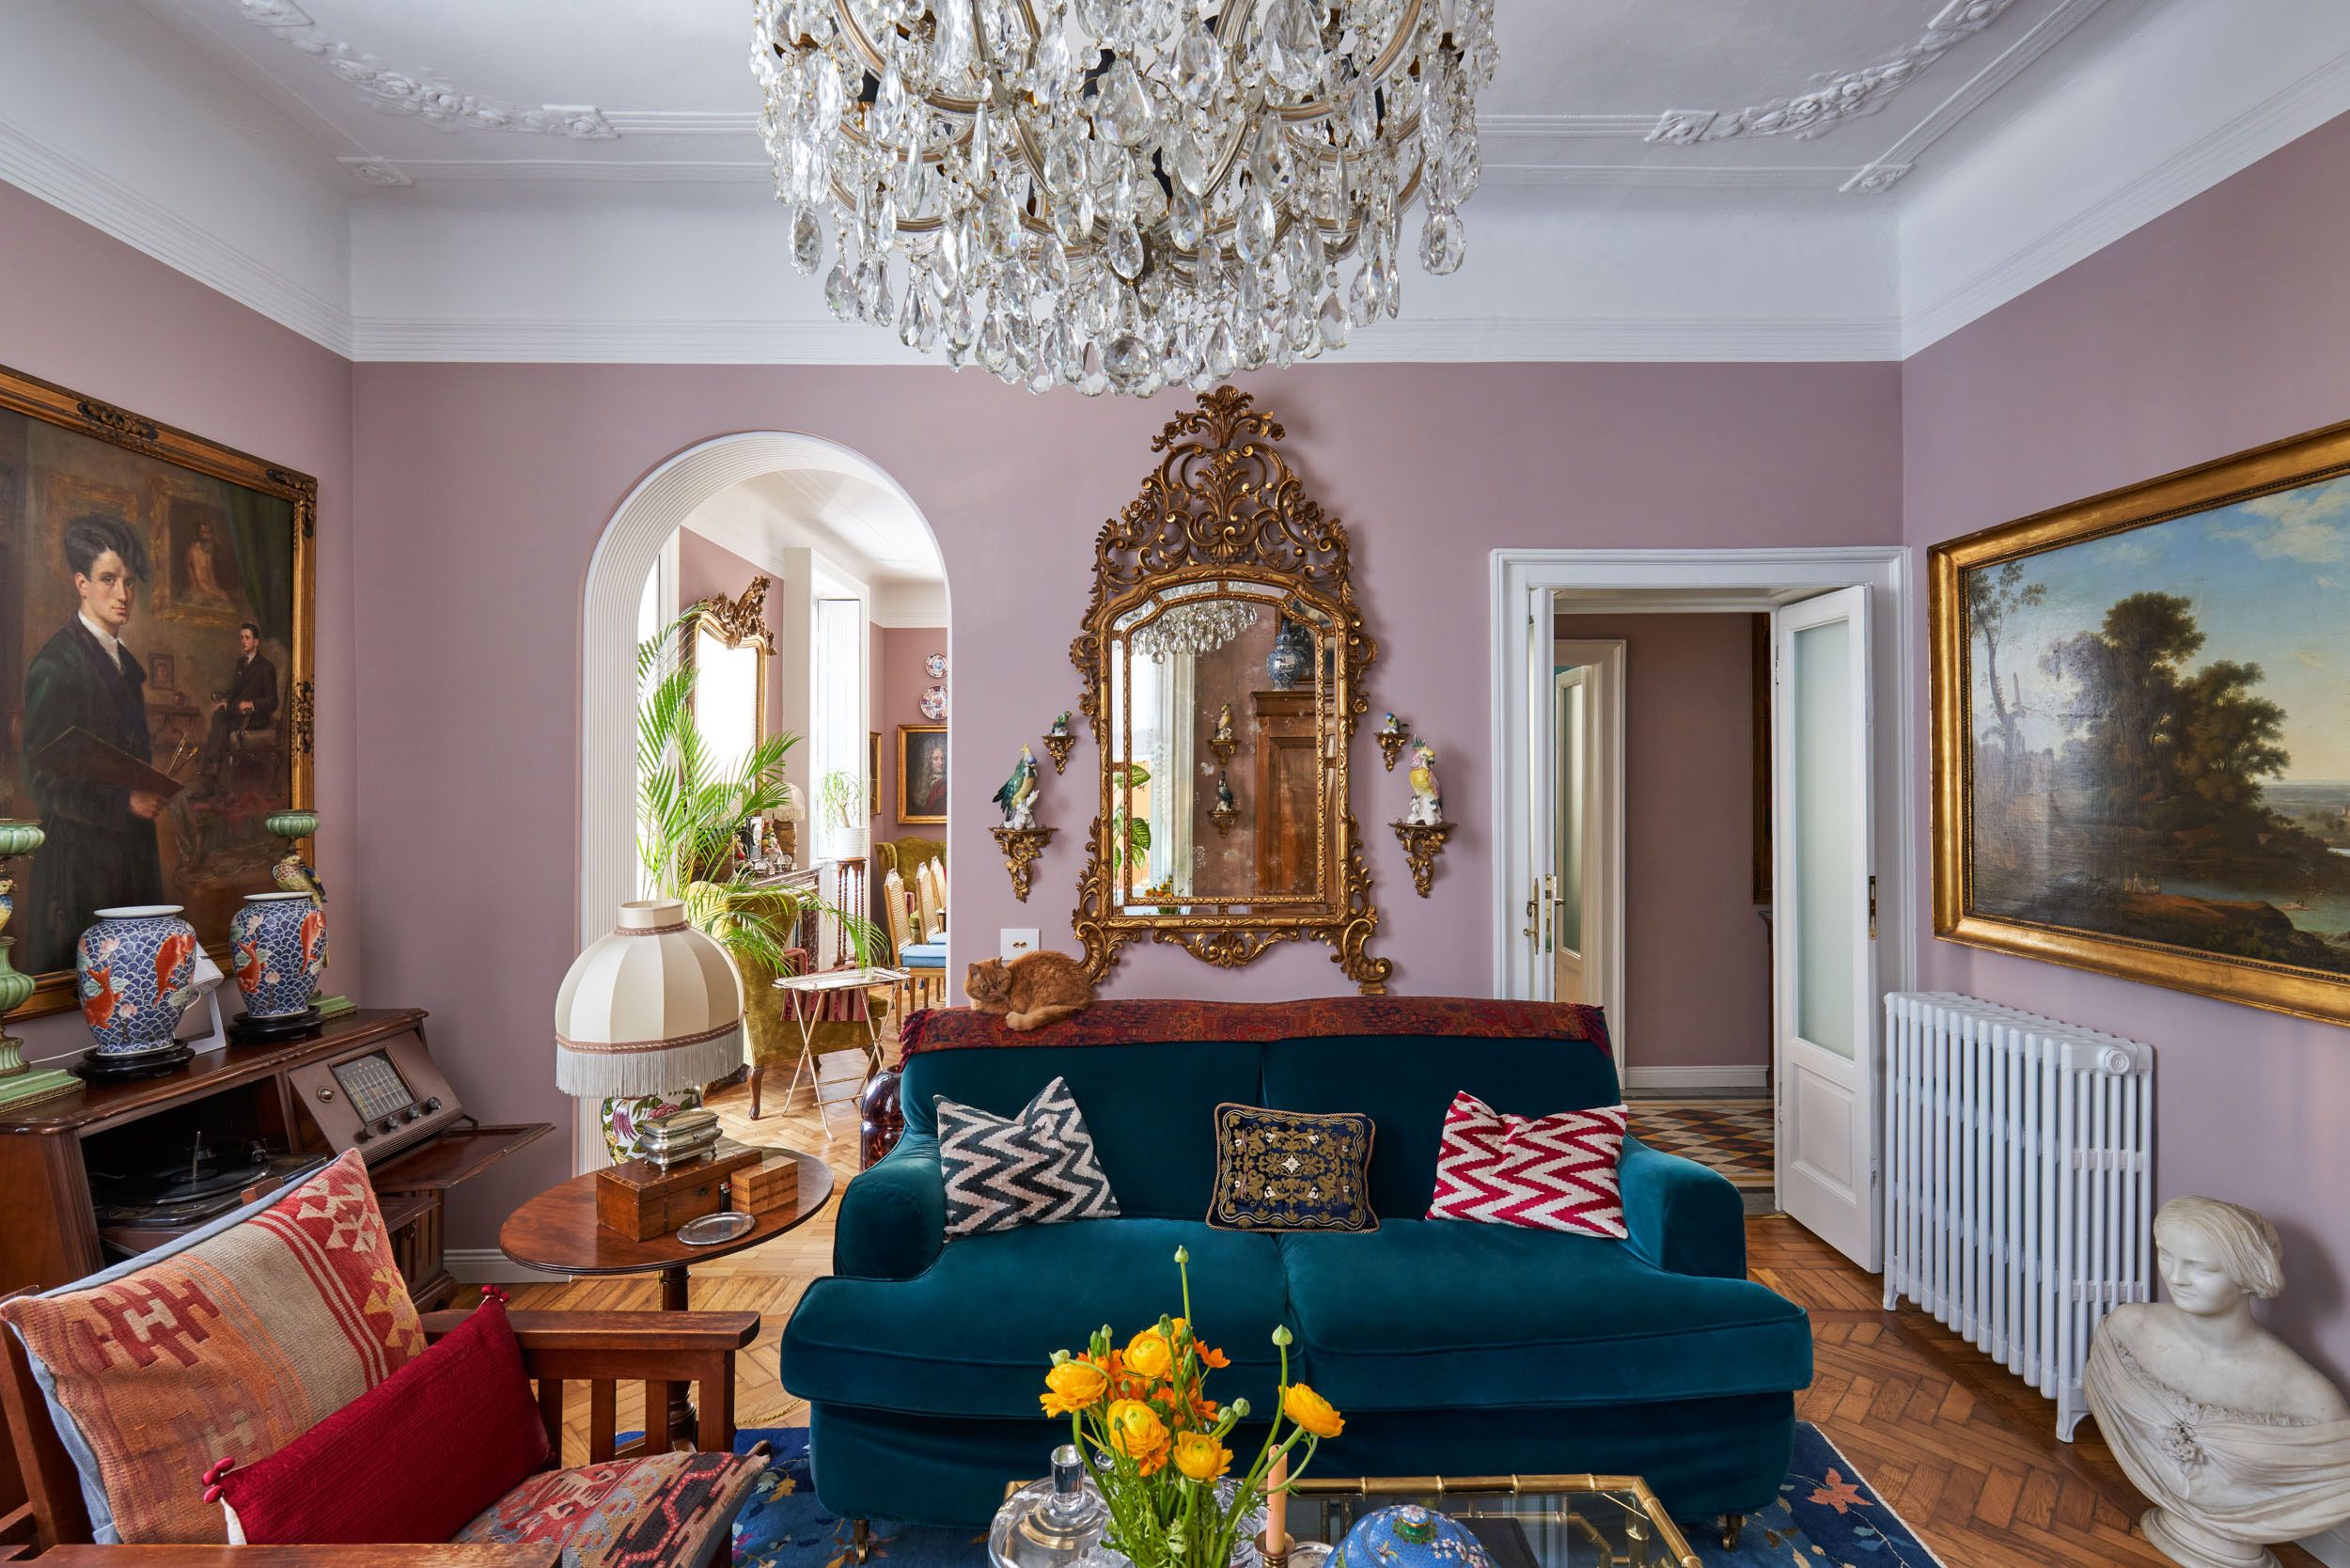 25 Living Room Color Ideas   Best Paint & Decor Colors for Living ...